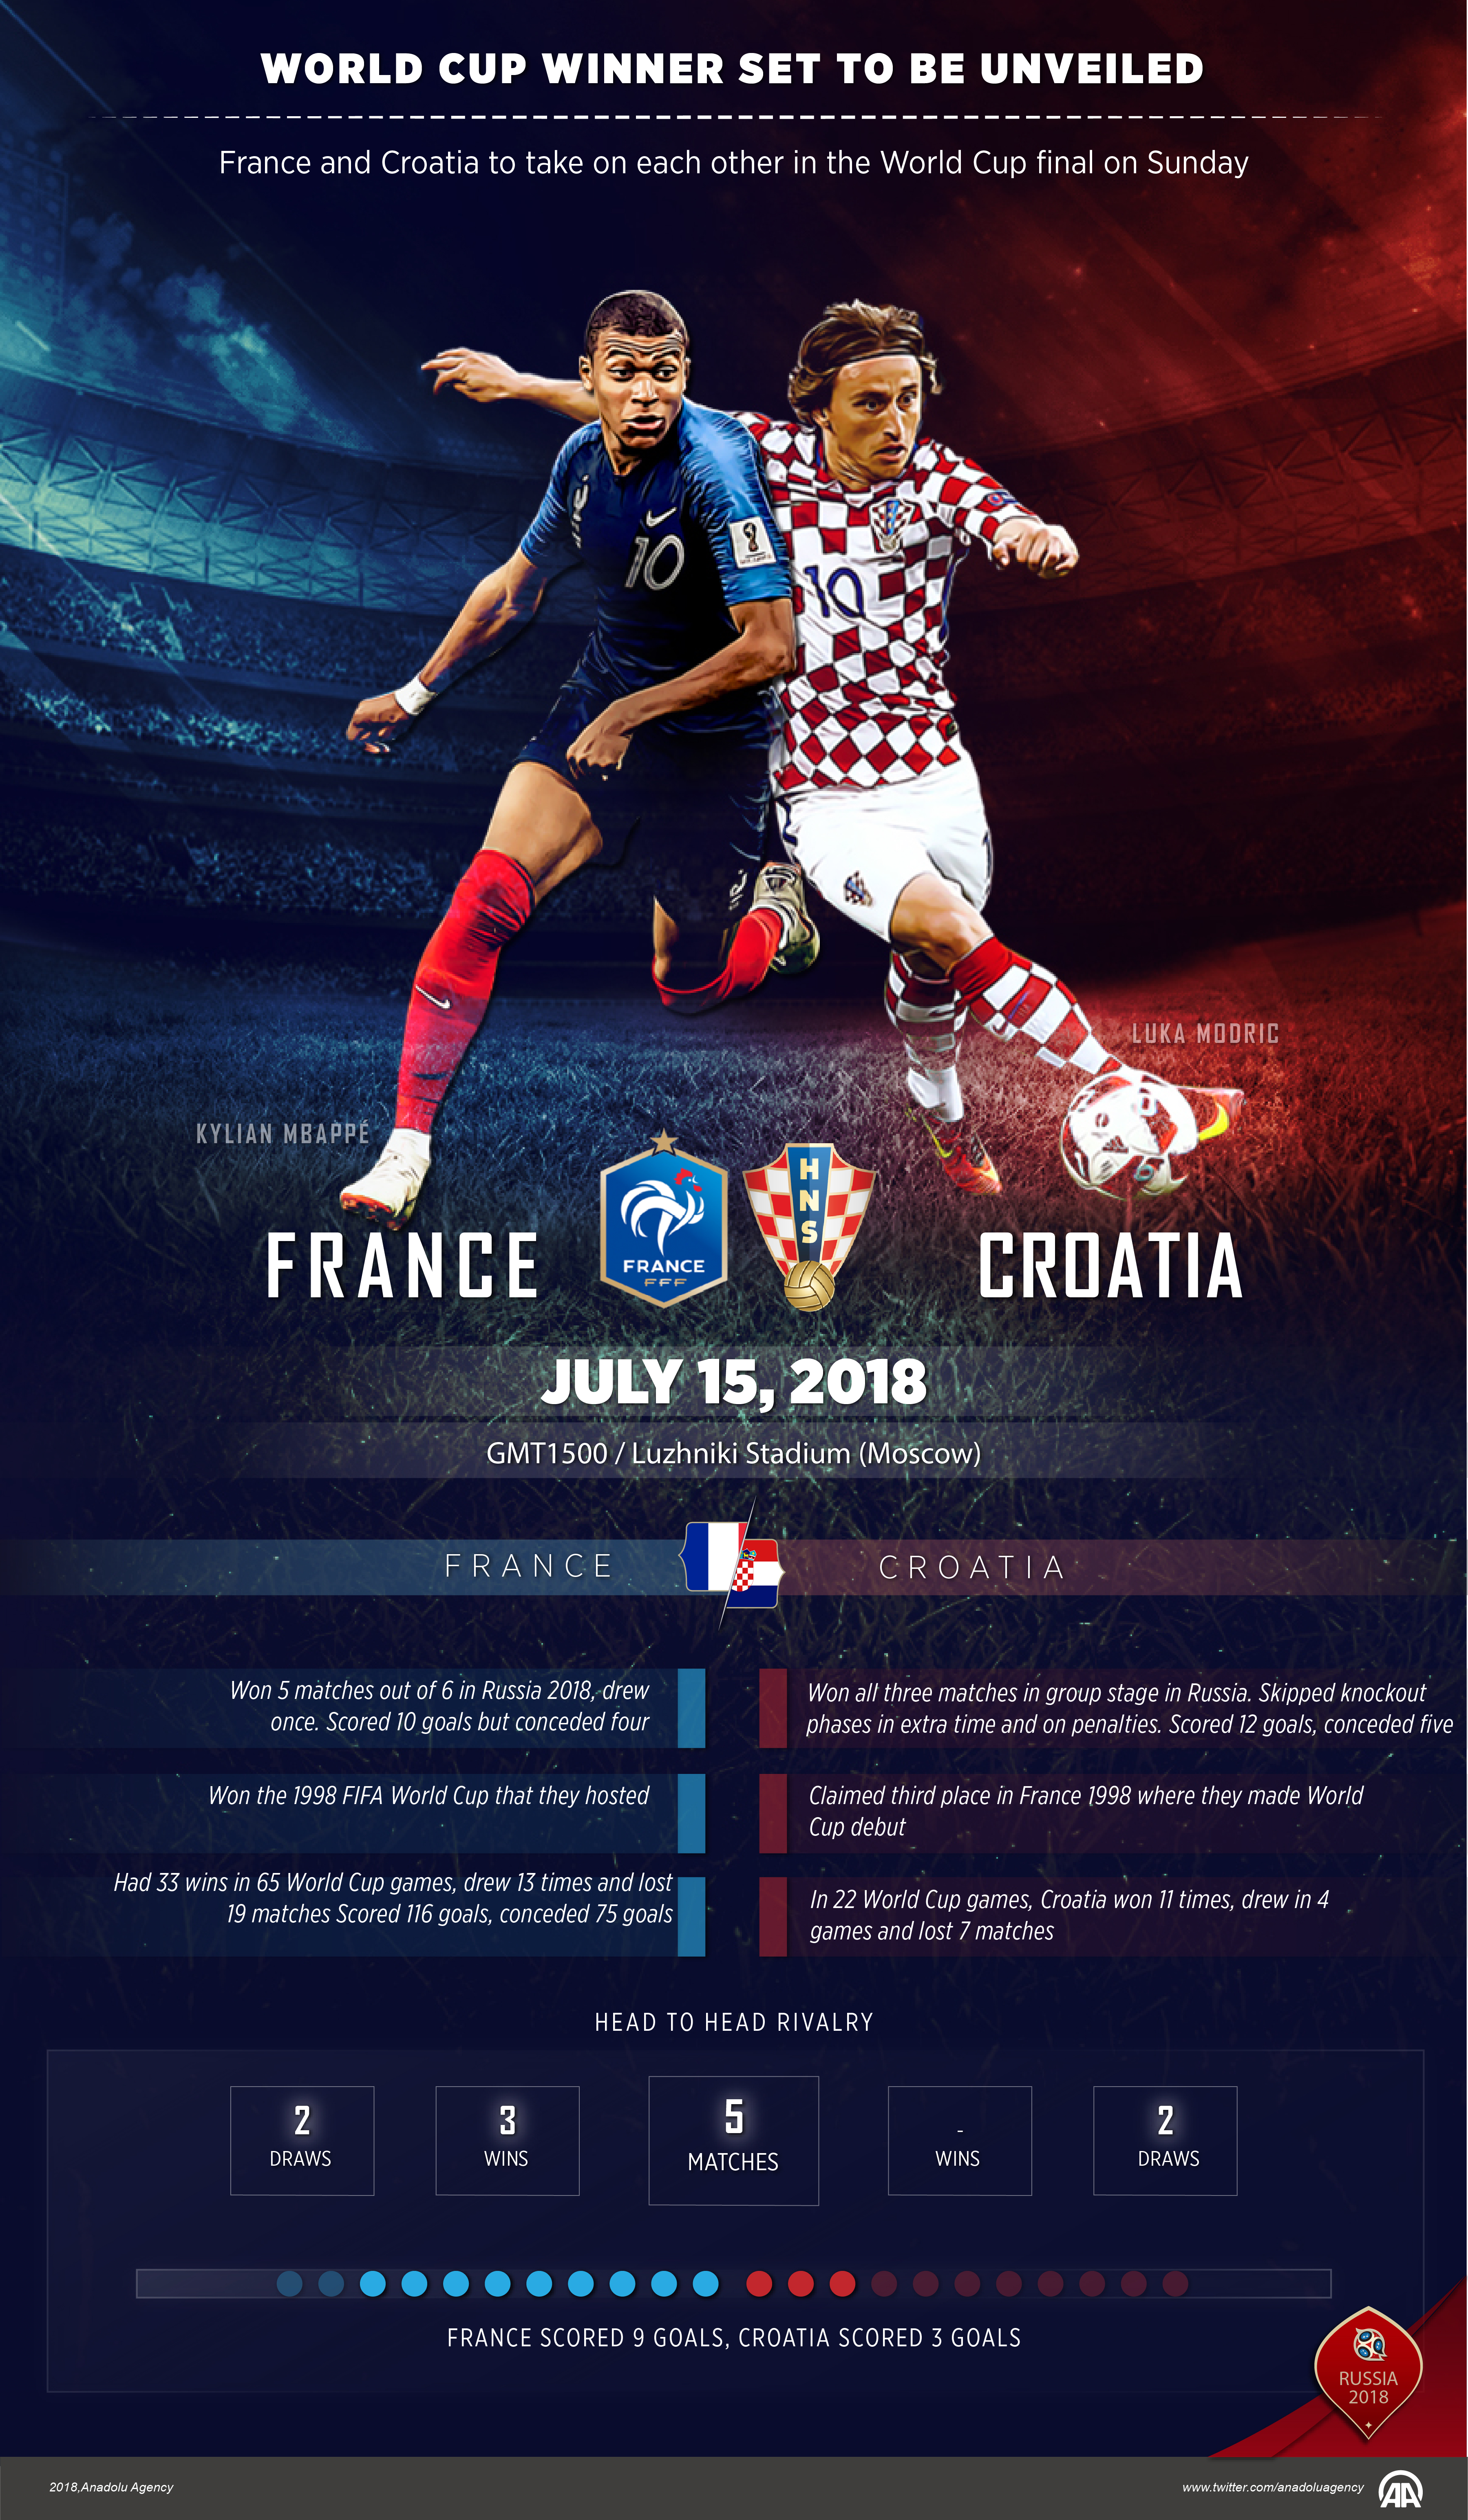 World Cup Final France vs. Croatia